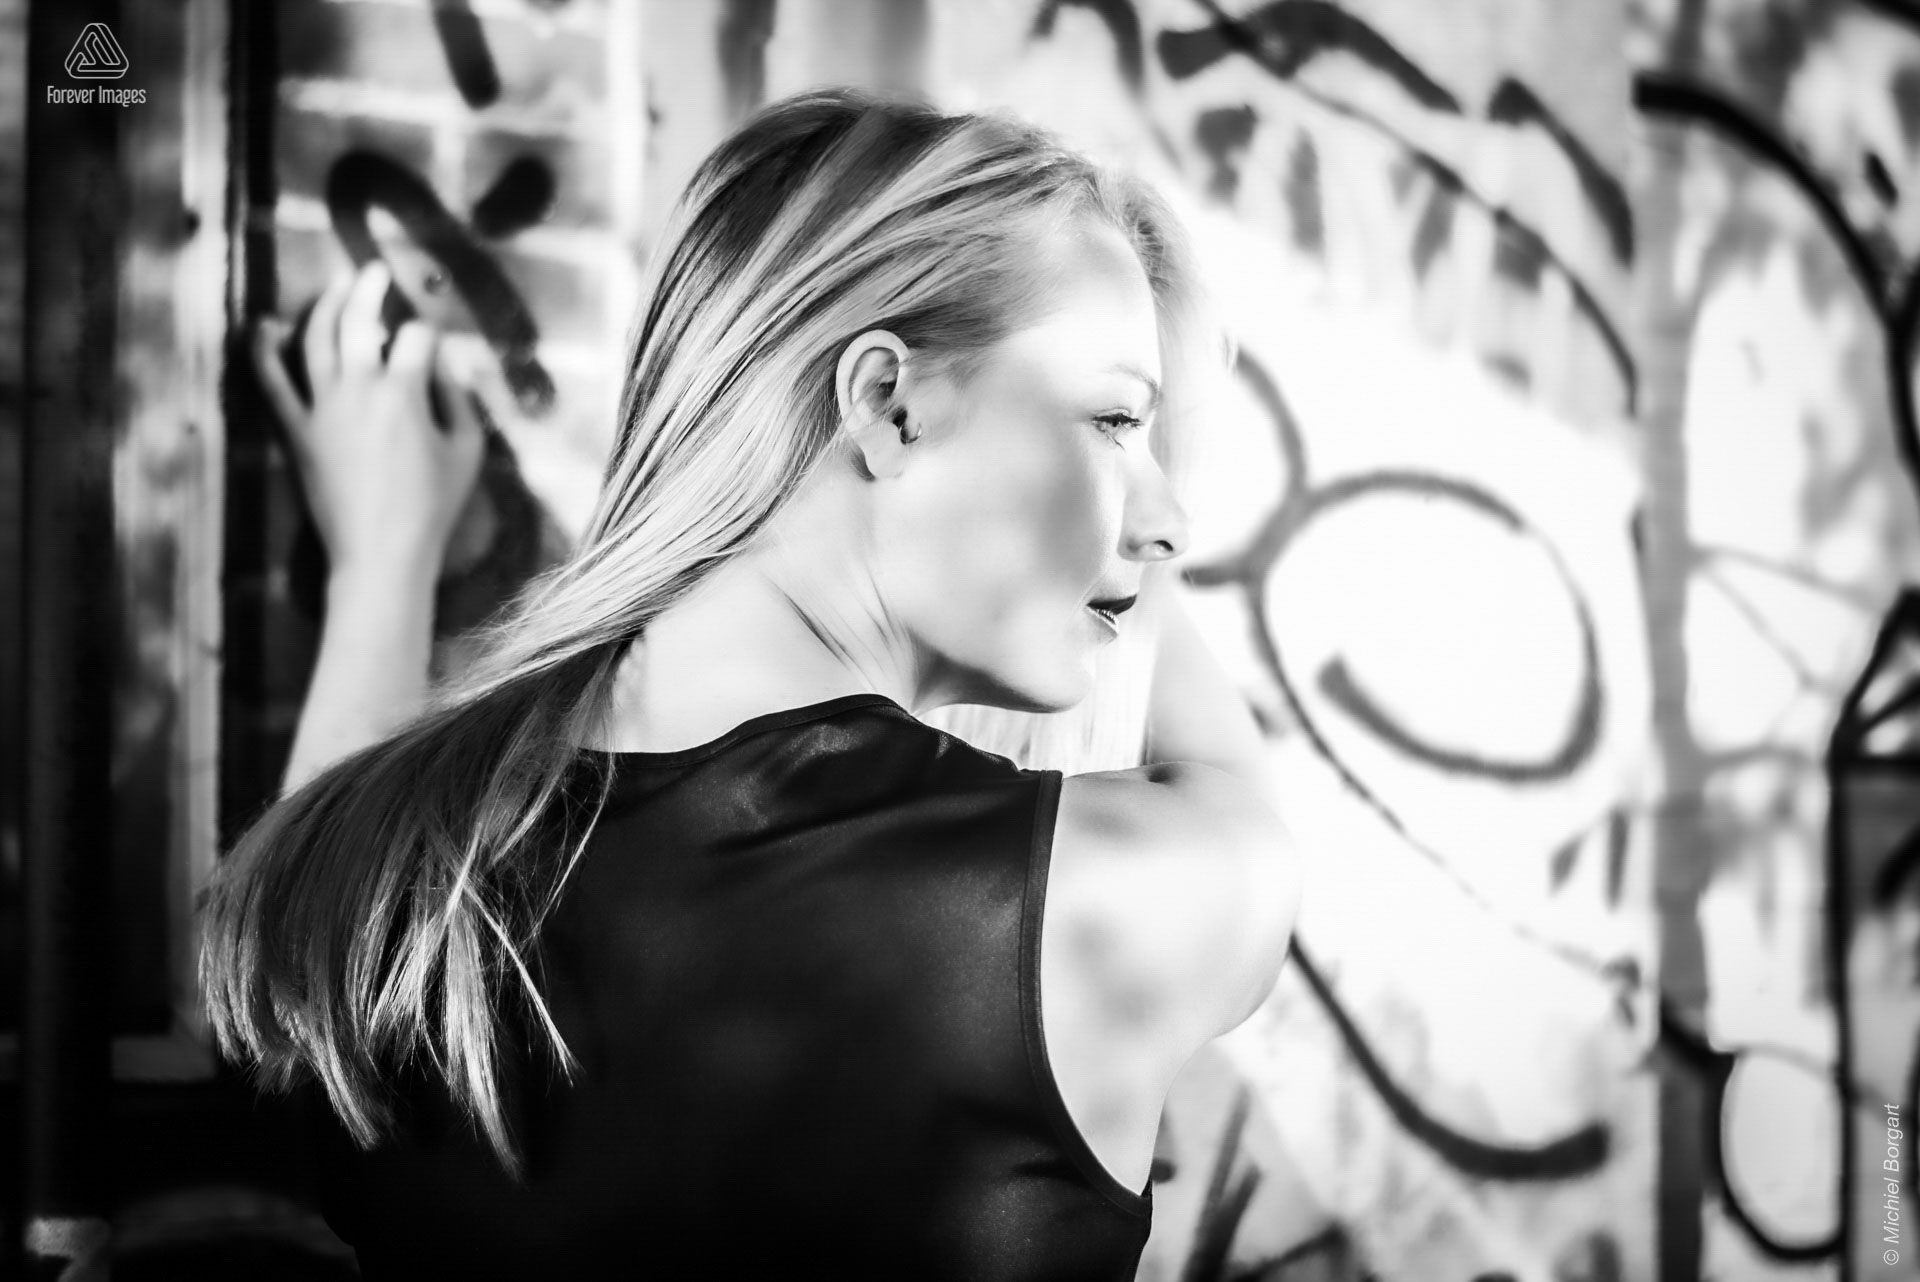 Portrait photo black and white B&W lady between graffiti | Heleen Muchachabiker NDSM Werf | Portrait Photographer Michiel Borgart - Forever Images.